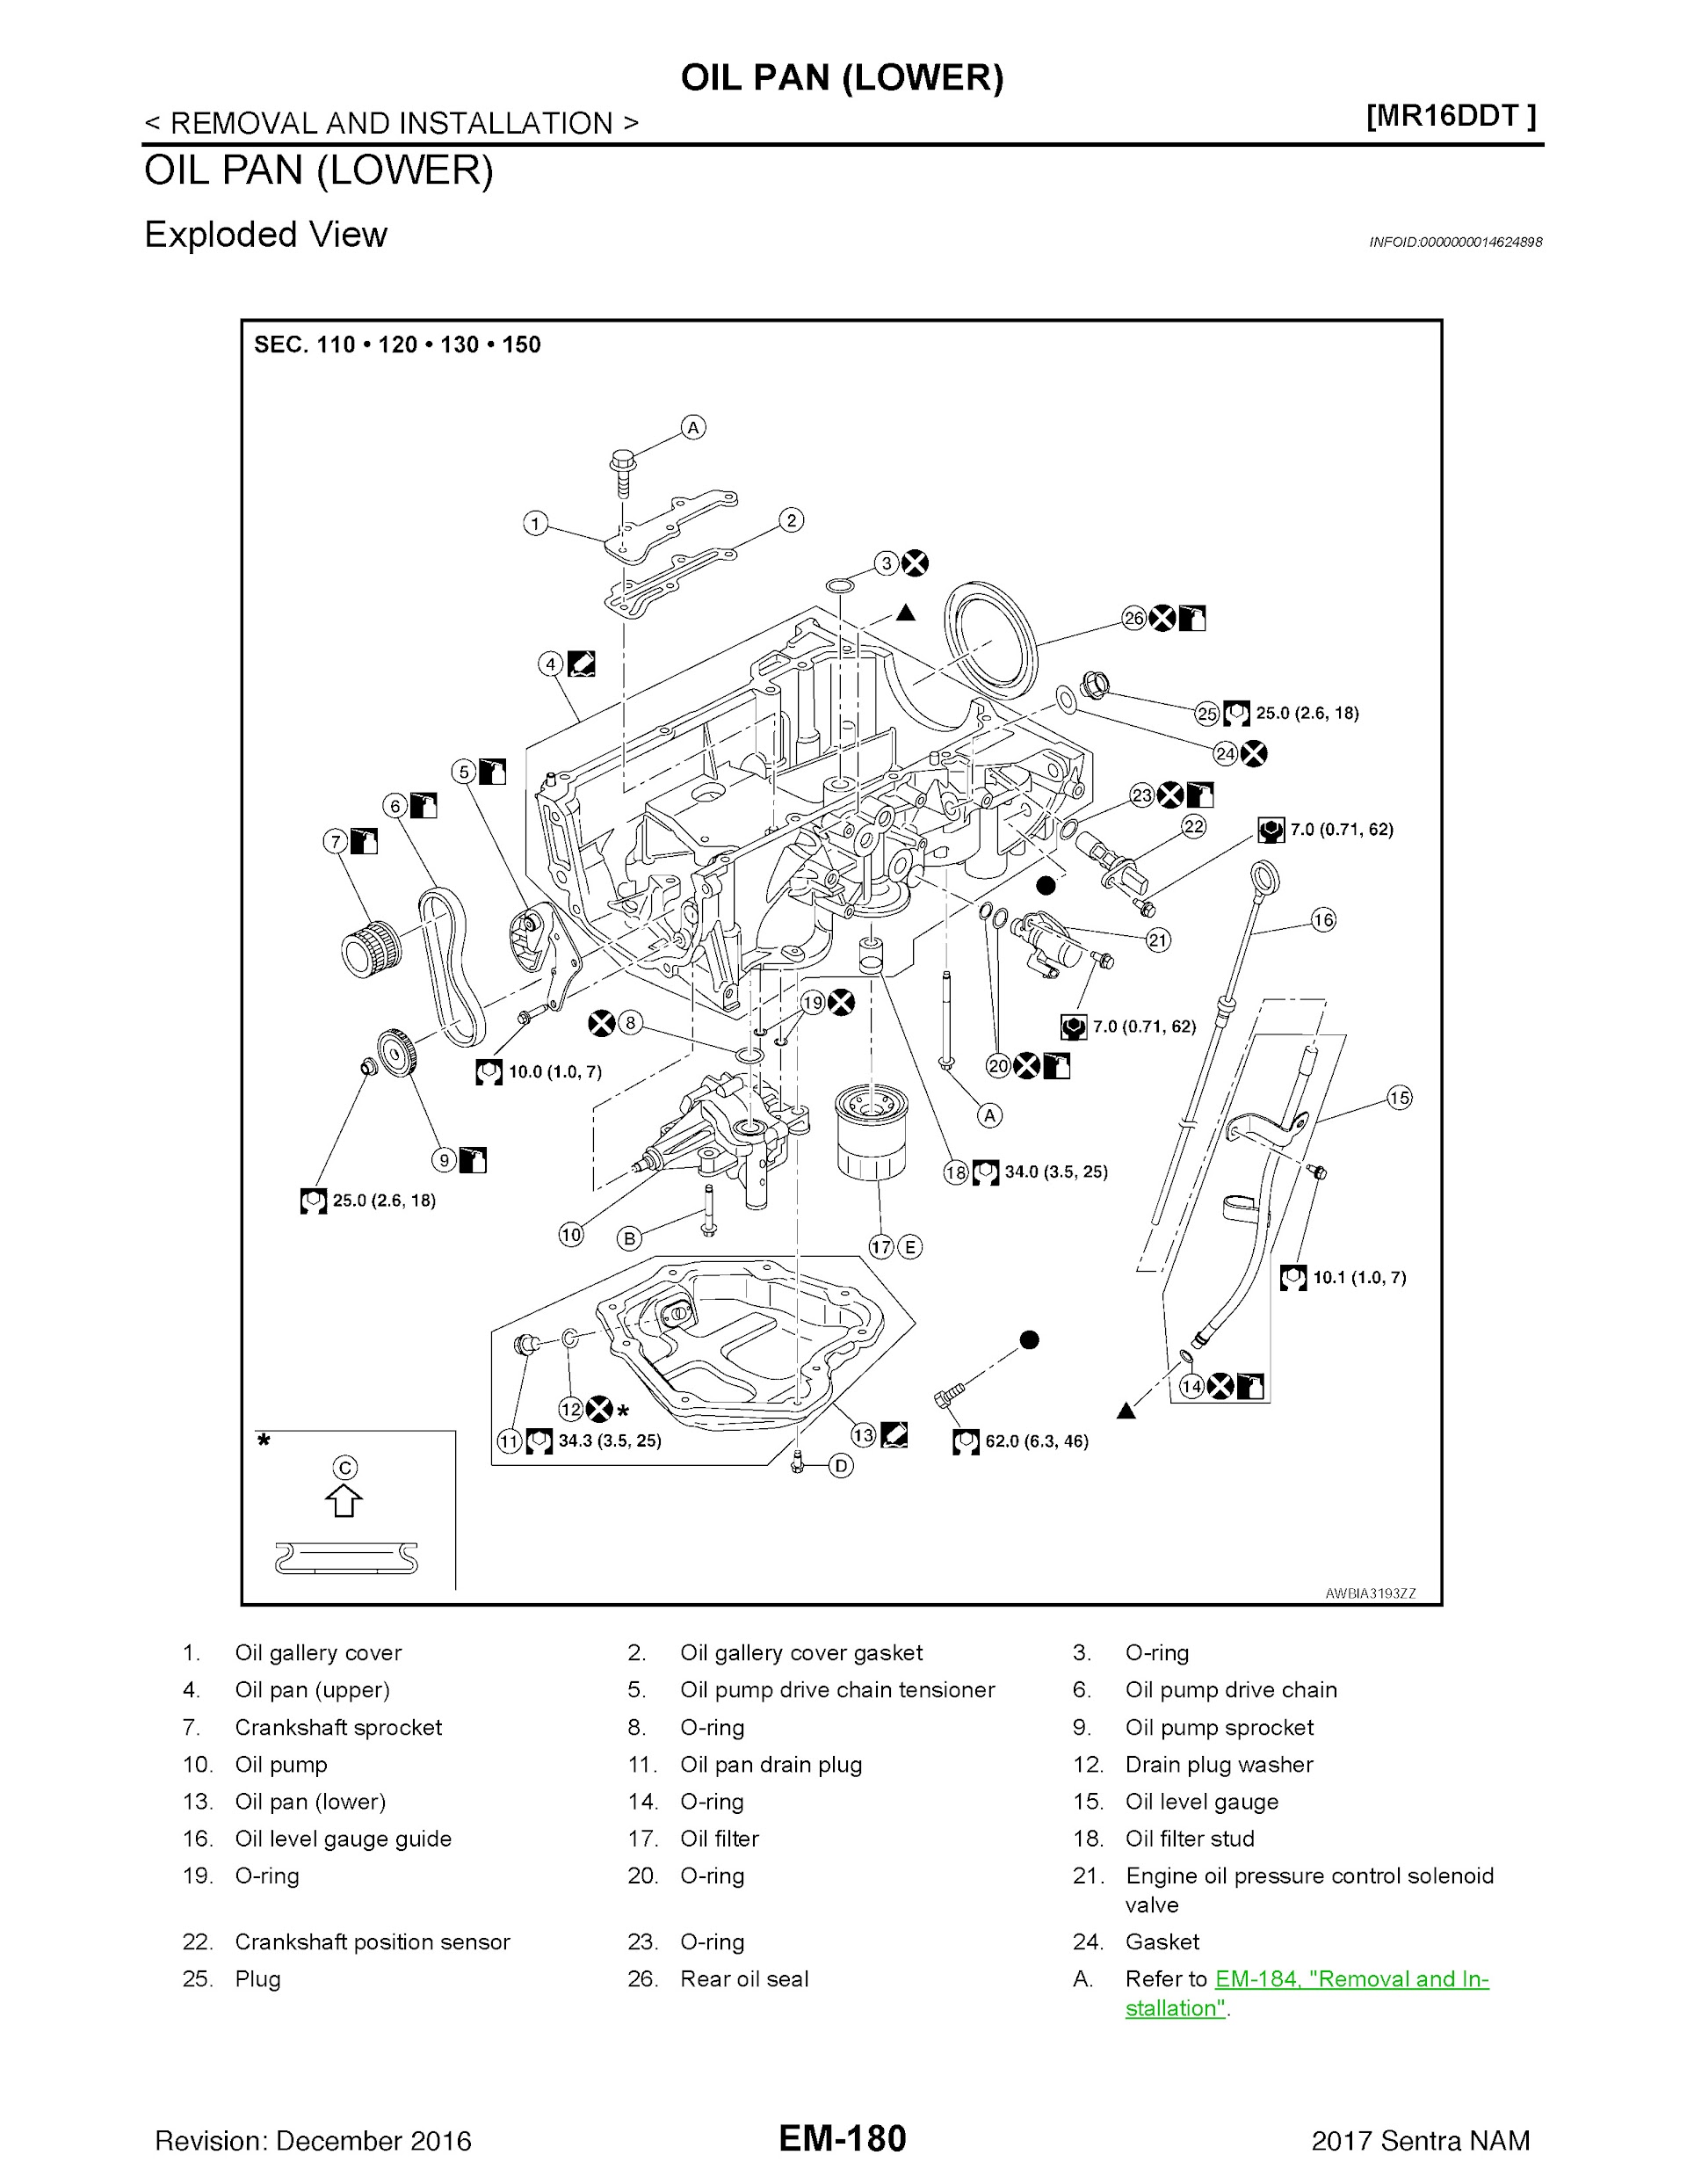 2017 Nissan Sentra Repair Manual, Oil Pan Removal and Installation